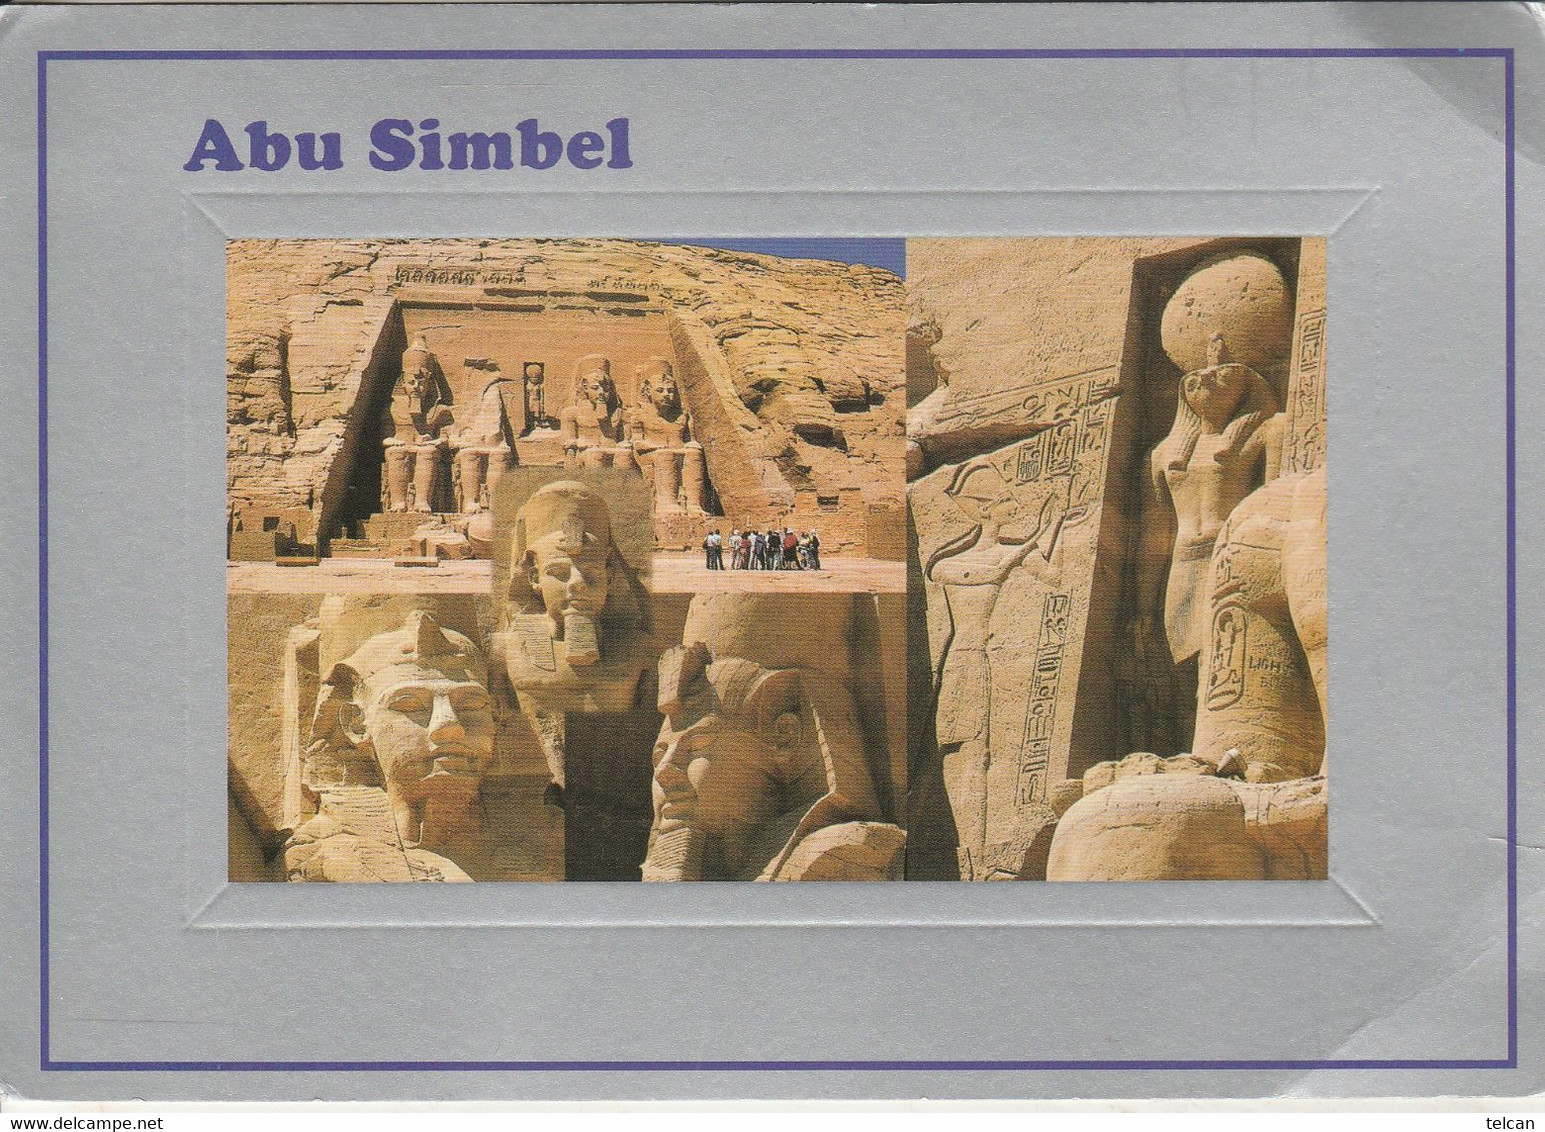 ABU SIMBEL - Abu Simbel